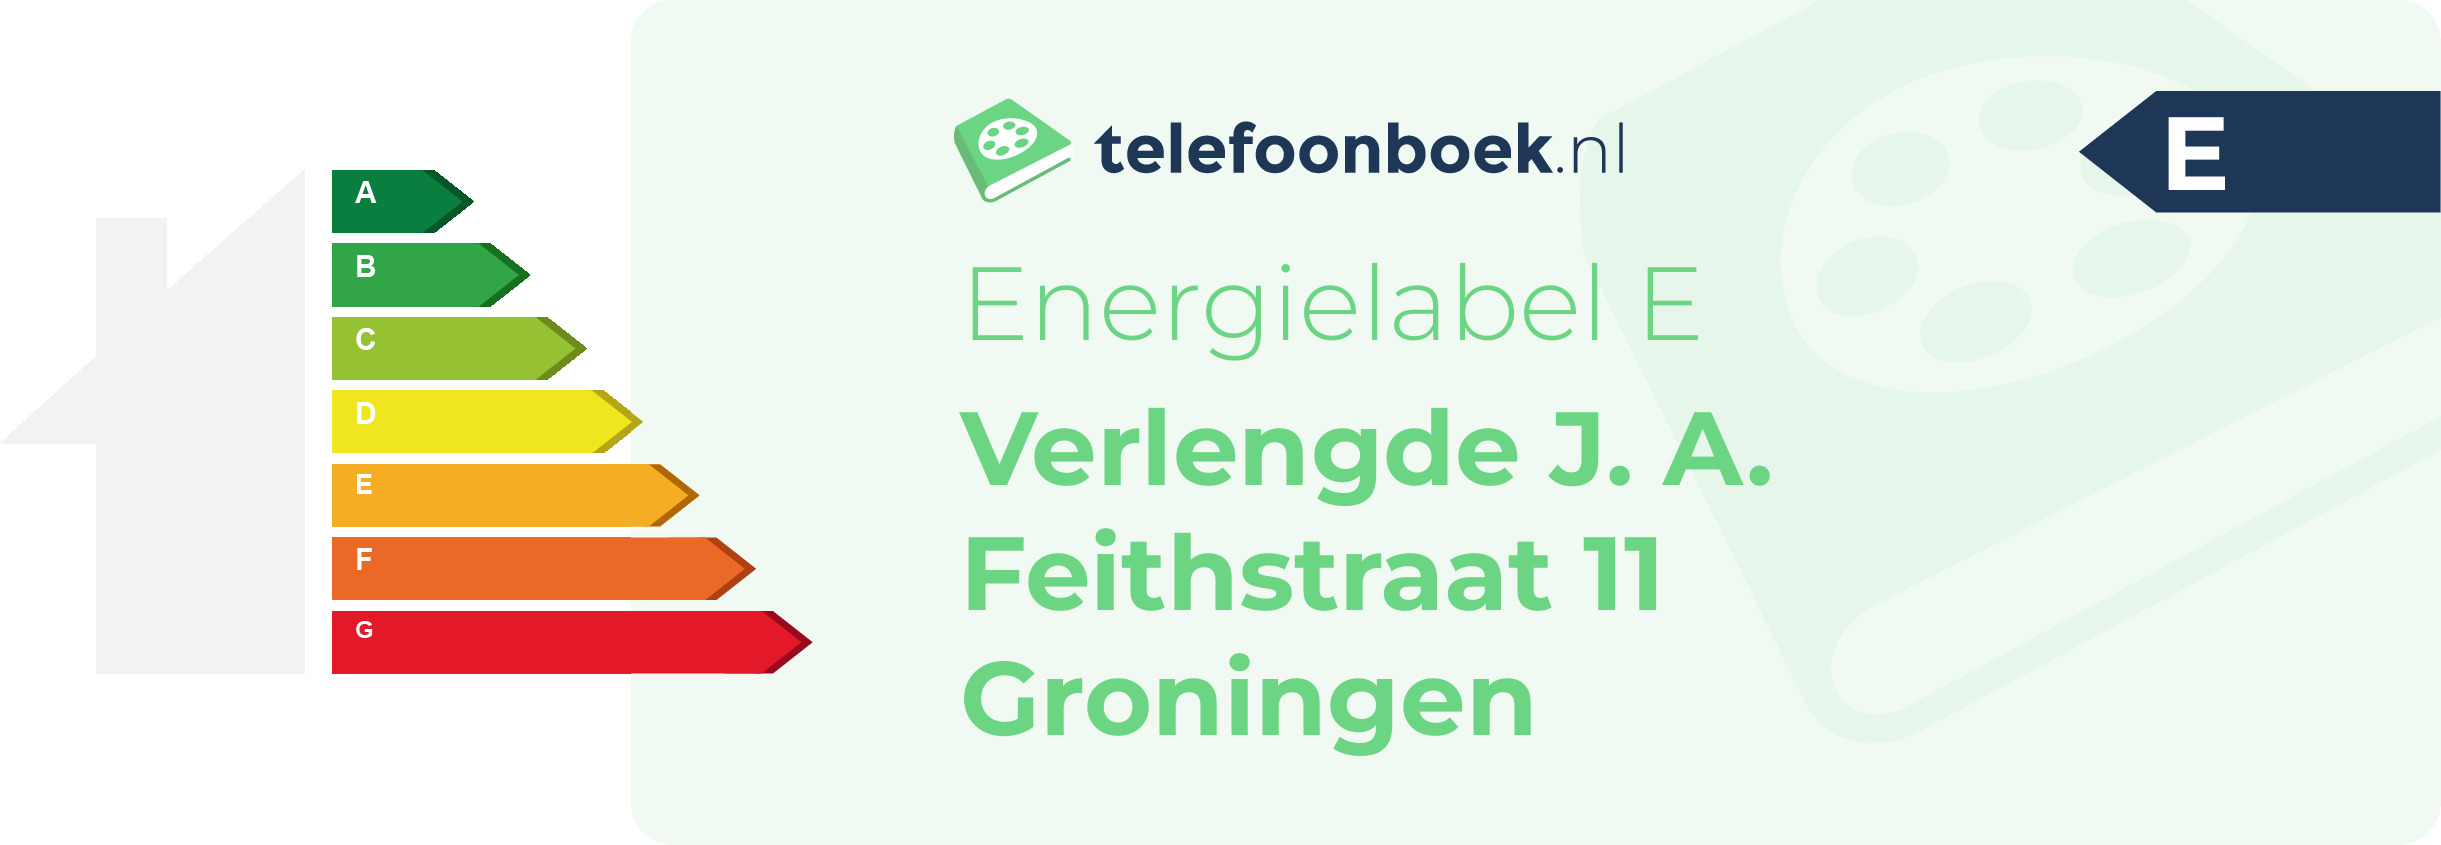 Energielabel Verlengde J. A. Feithstraat 11 Groningen